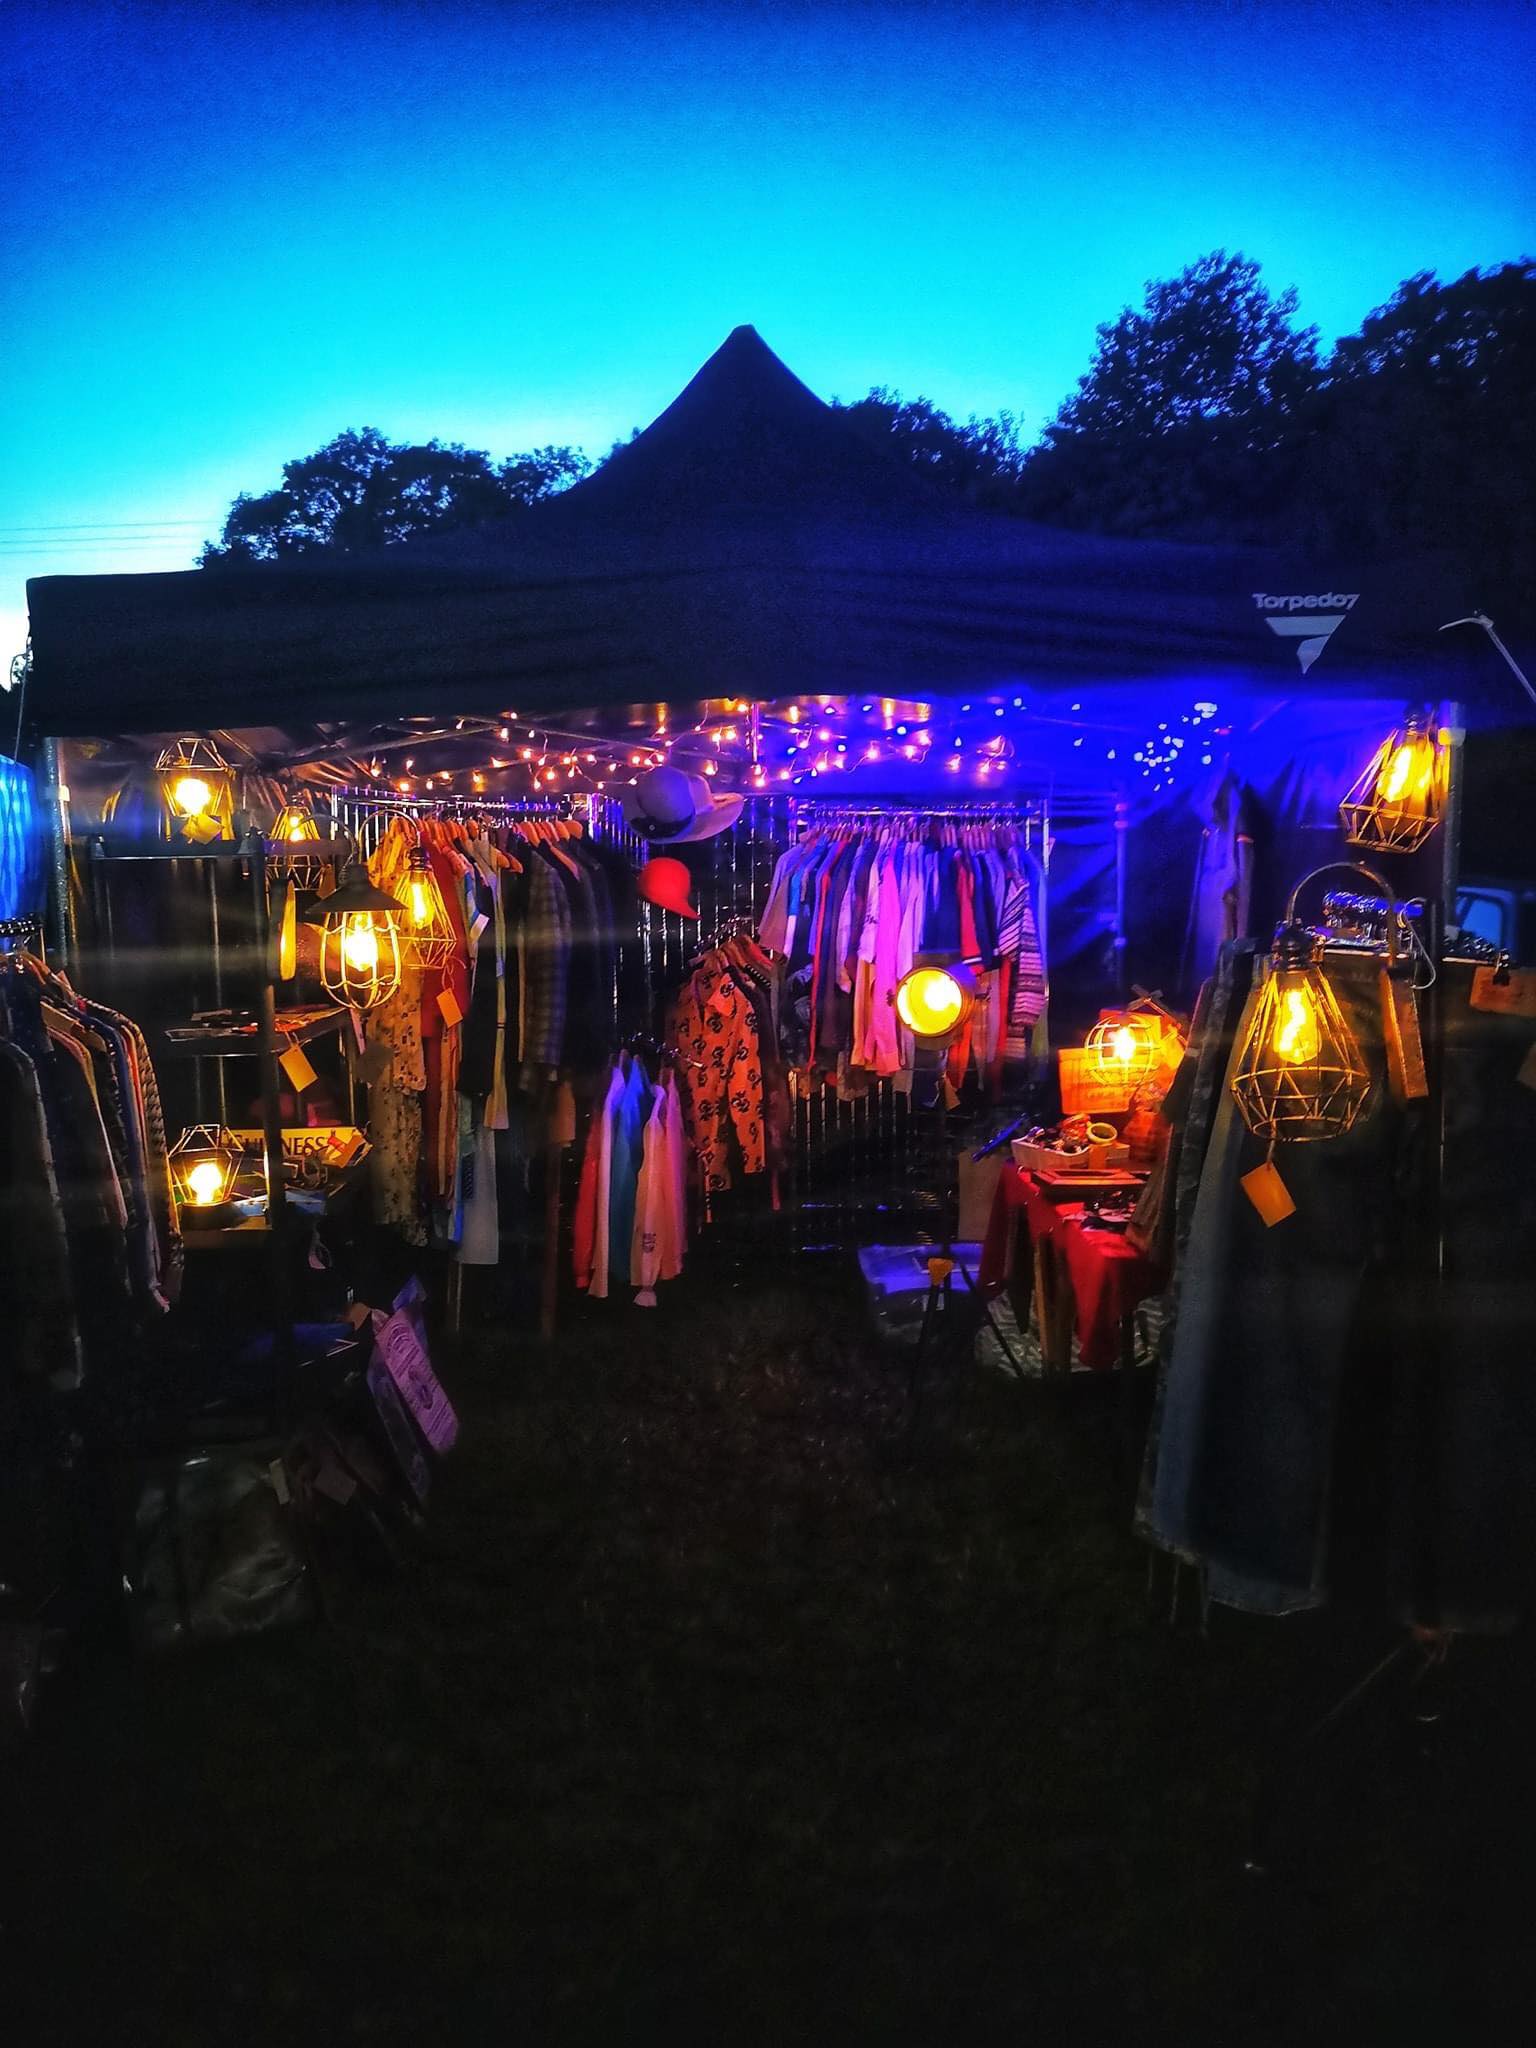 The Enchanted Night Markets